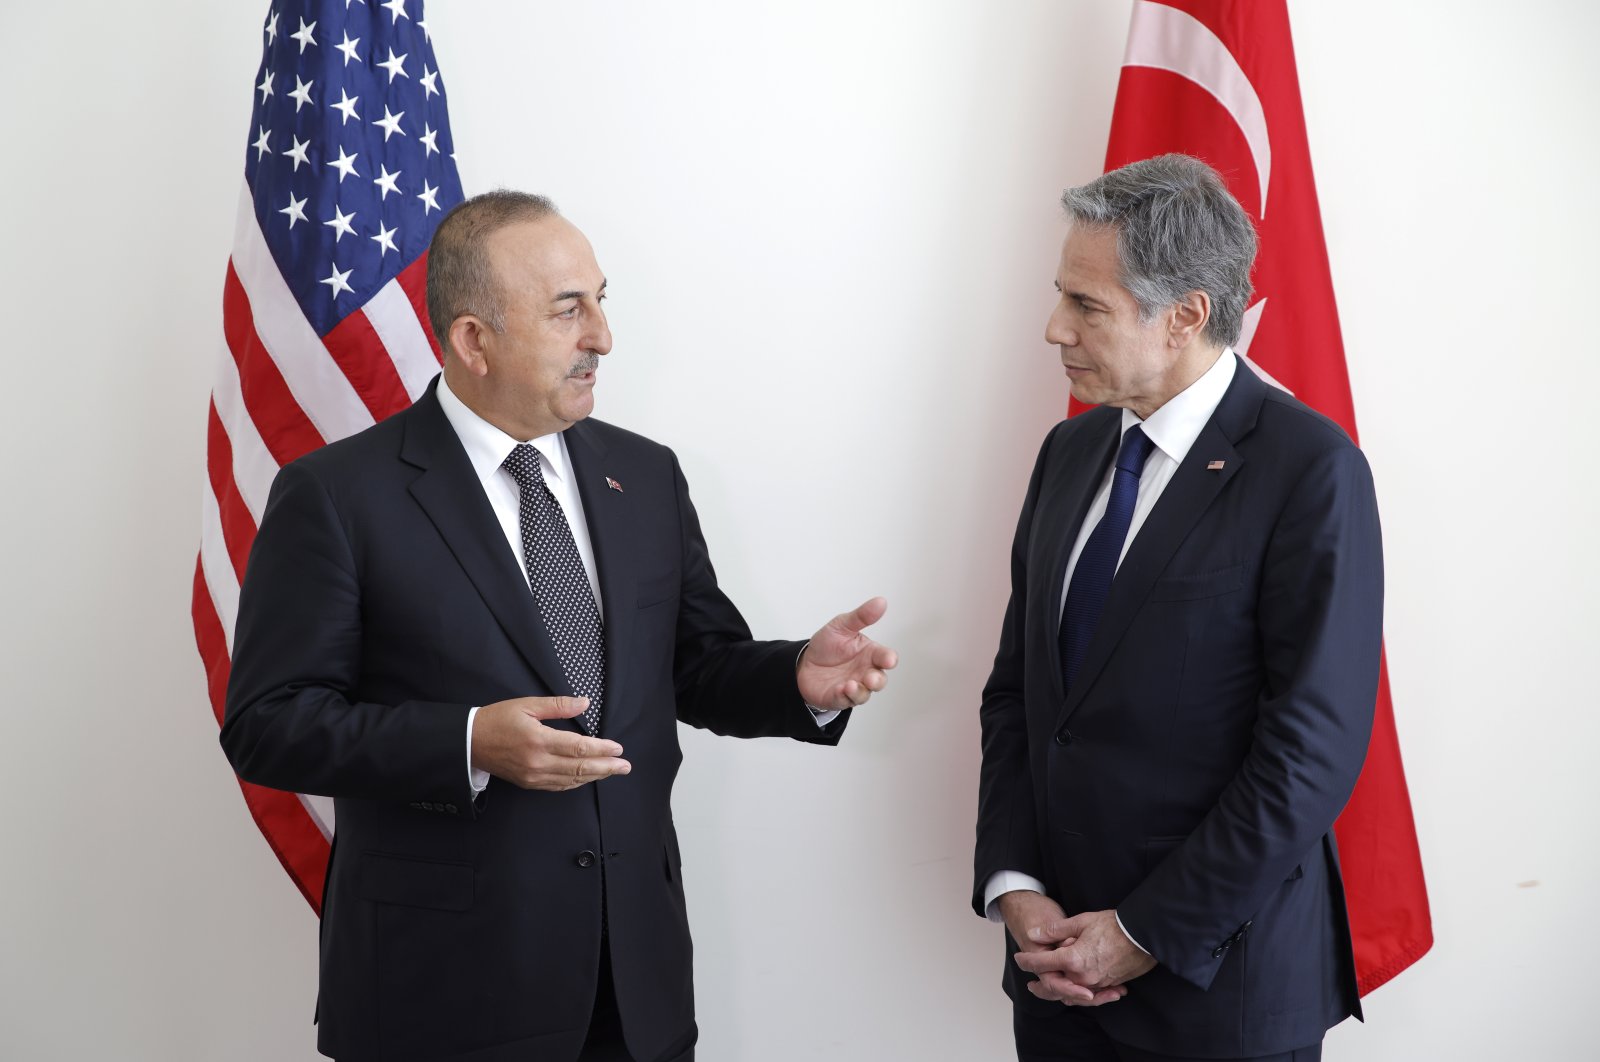 Foreign Minister Mevlüt Çavuşoğlu meets with U.S. Secretary of State Antony Blinken at the United Nations, New York, U.S., May 18, 2022. (Eduardo Munoz/Pool via AP)